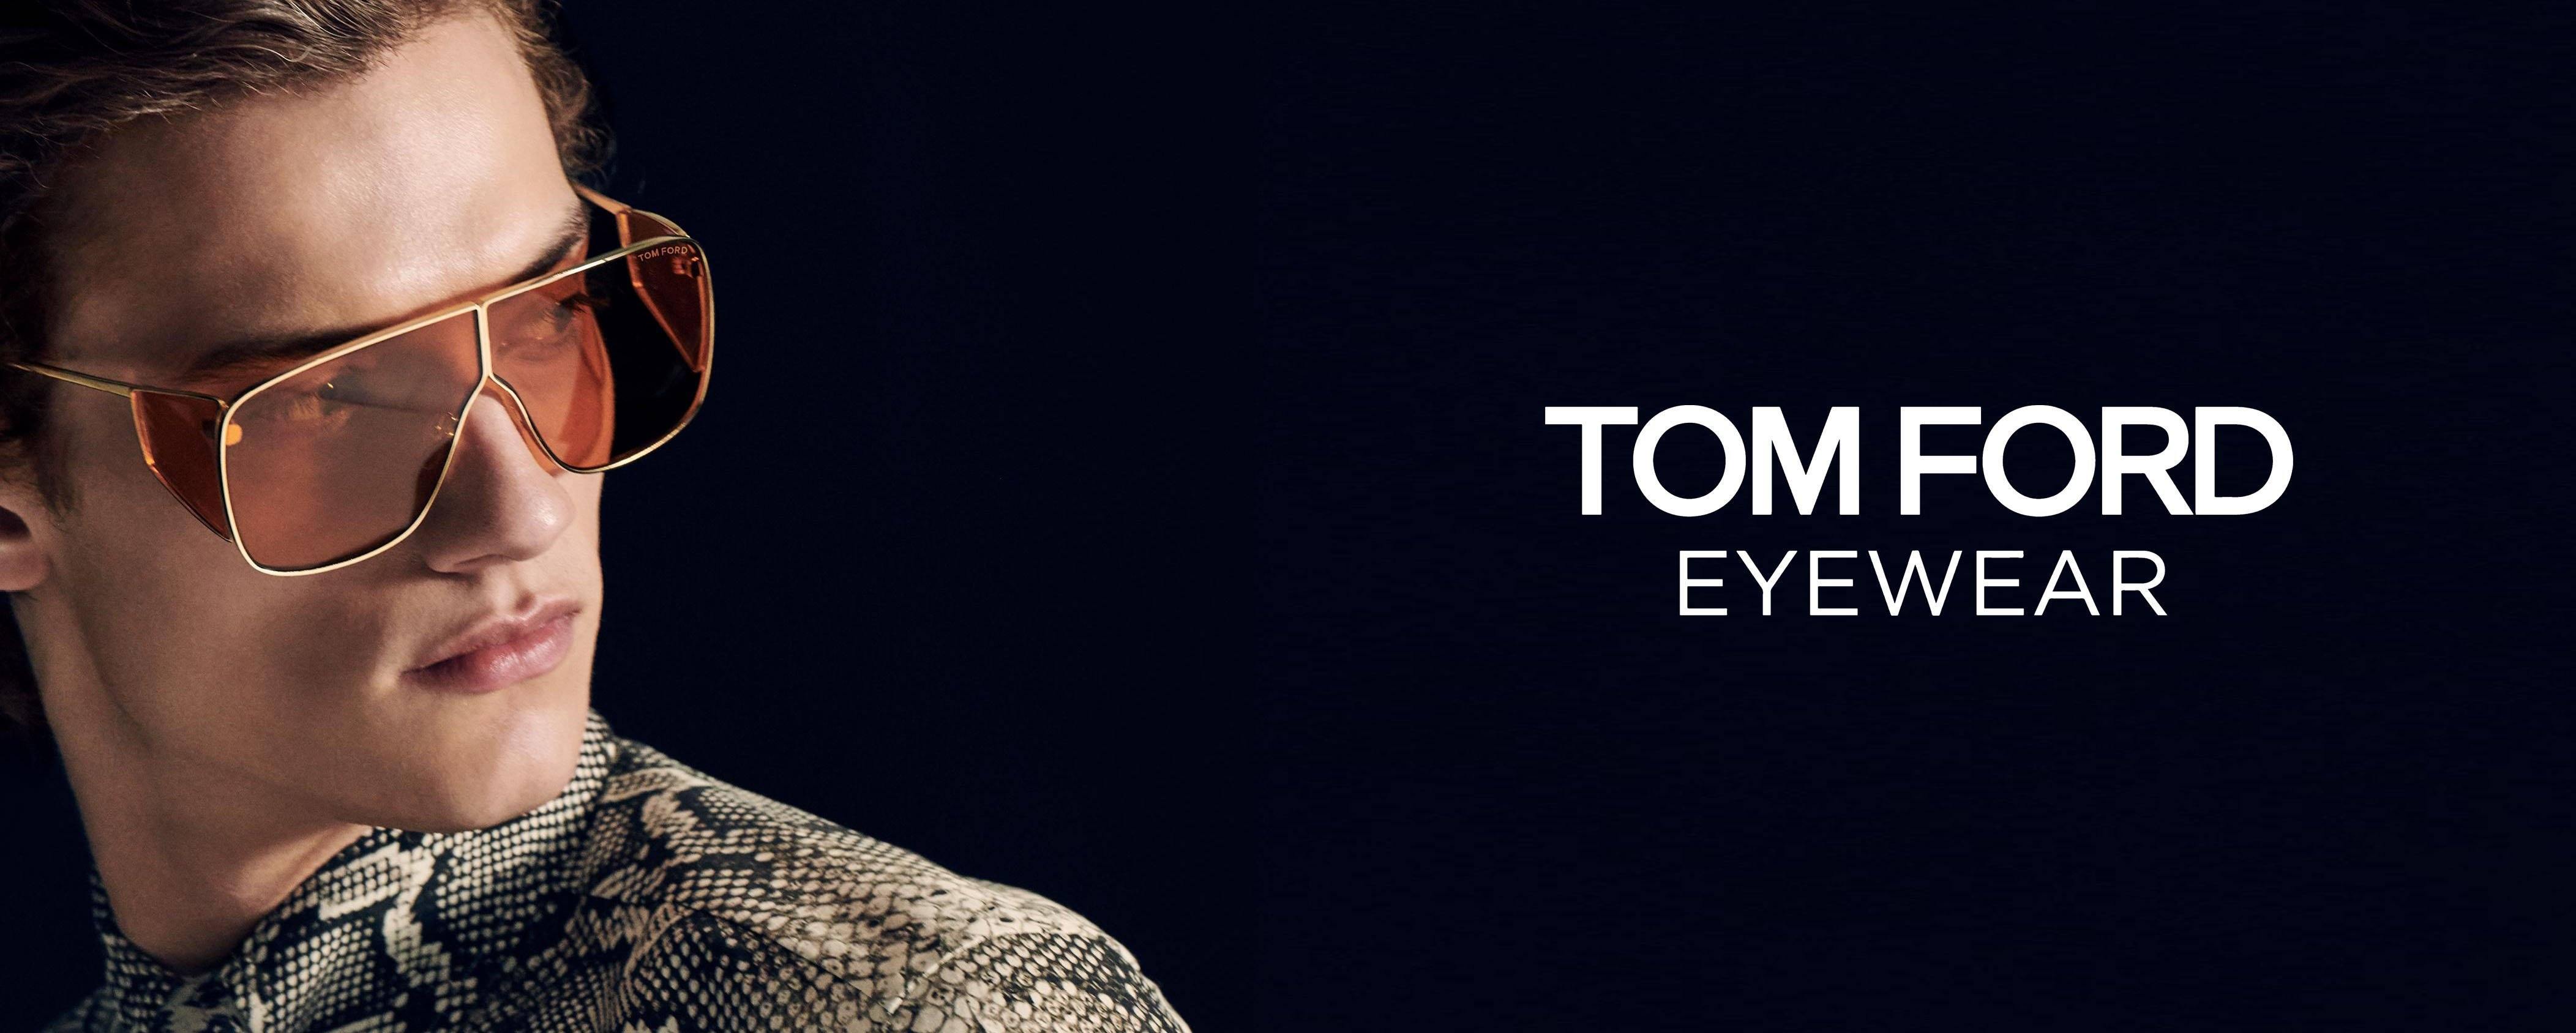 Tom Ford Eyewear by livesunglasses Admin